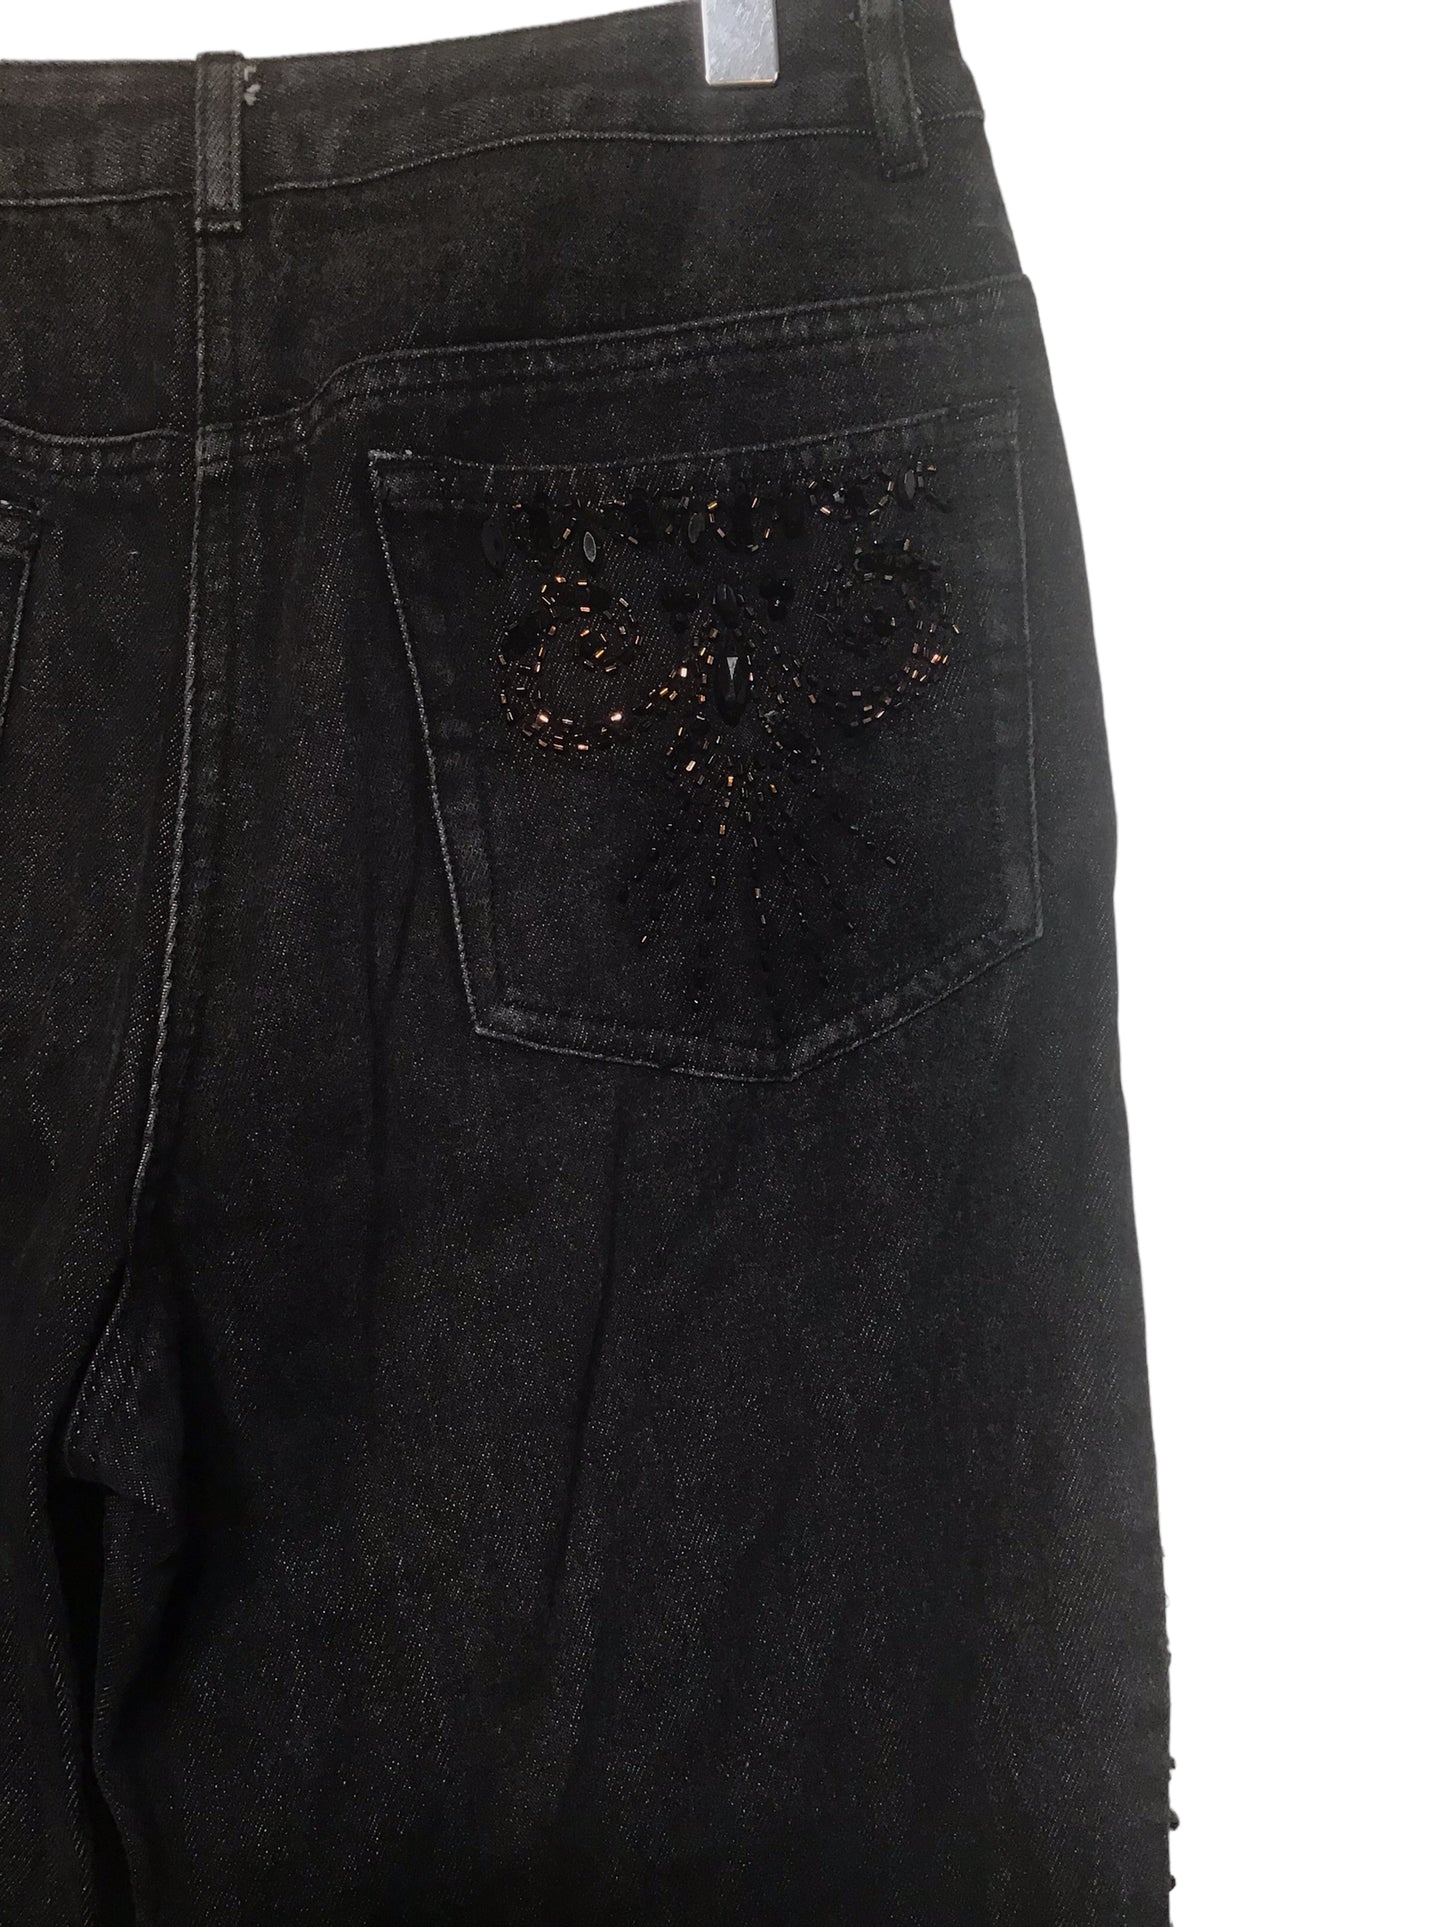 Oasis Black Denim Jeans (30x31)